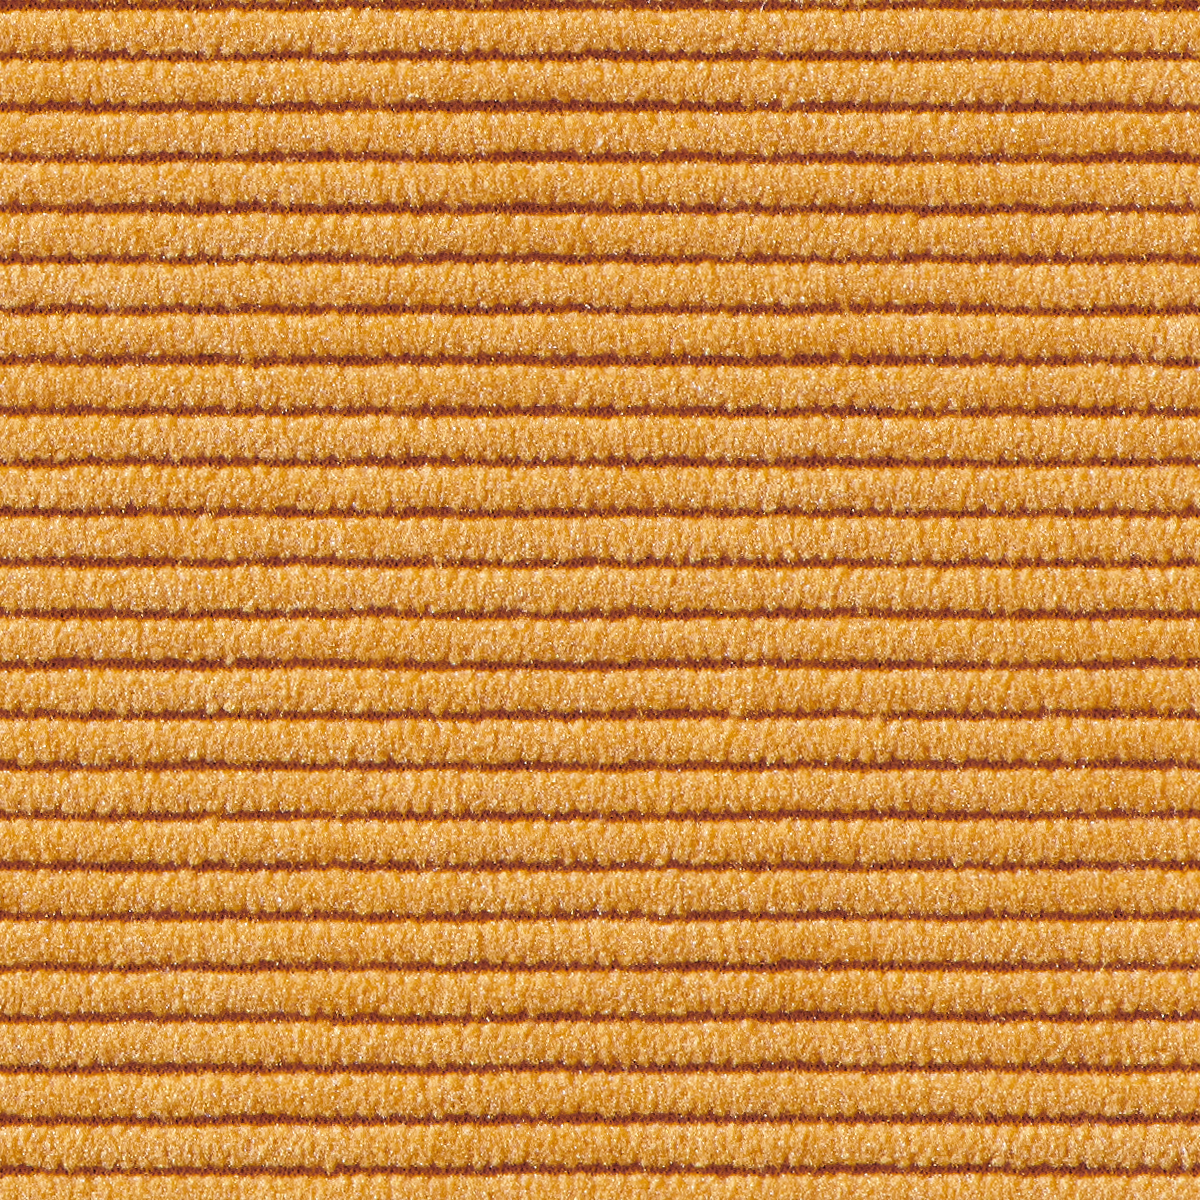 Fabric Sample MS - Camel Yellow